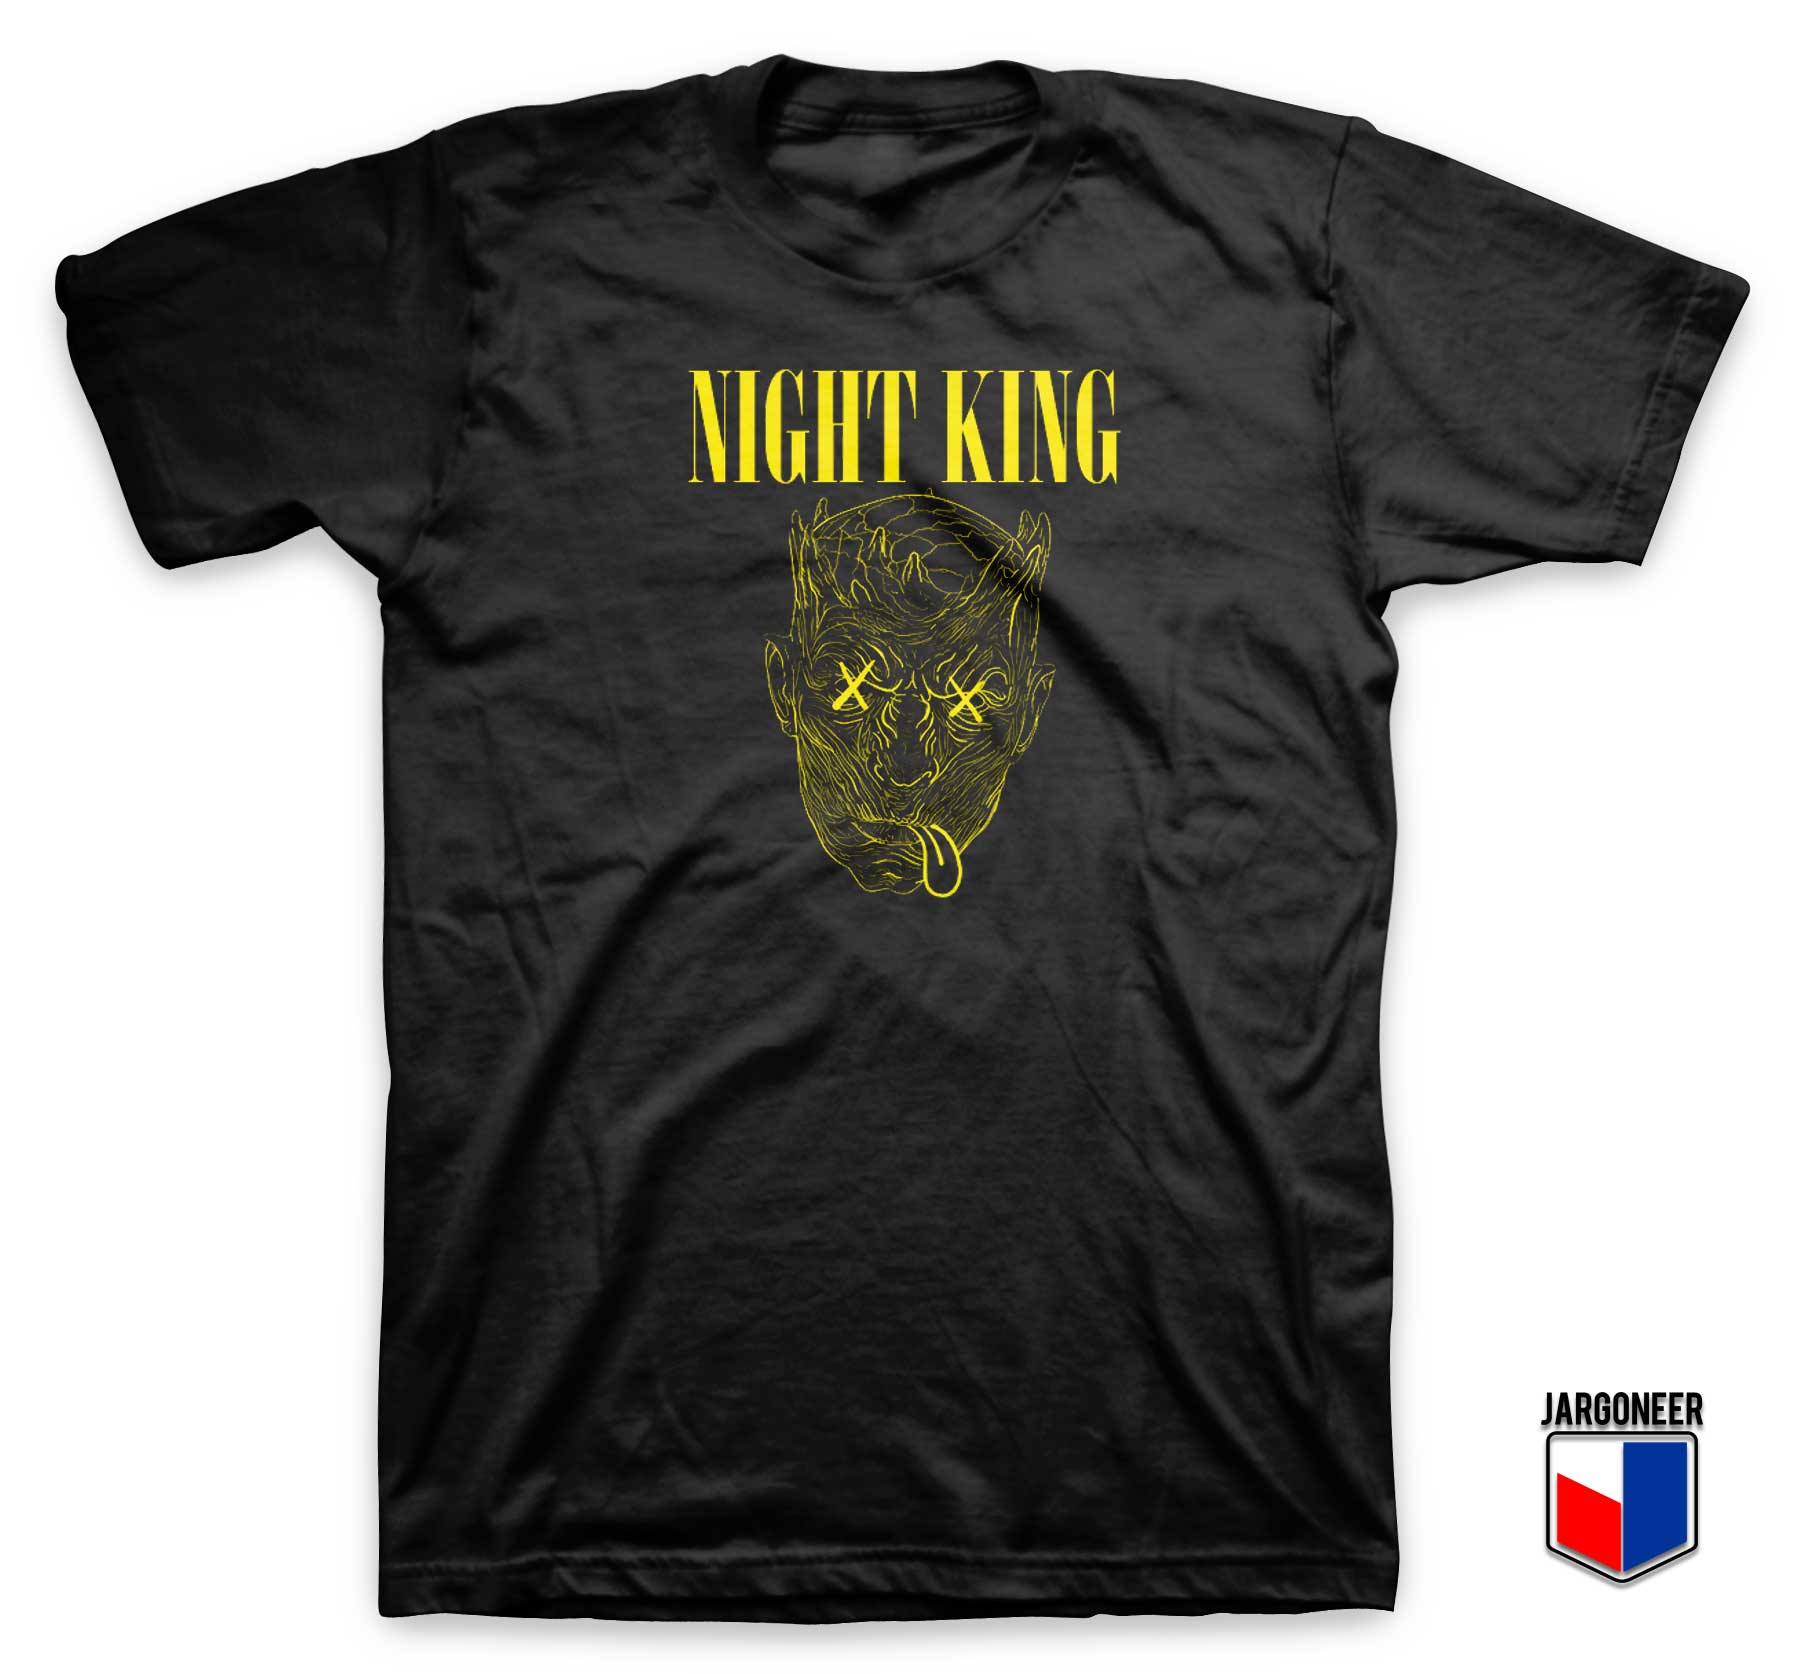 Night King T shirt - Shop Unique Graphic Cool Shirt Designs